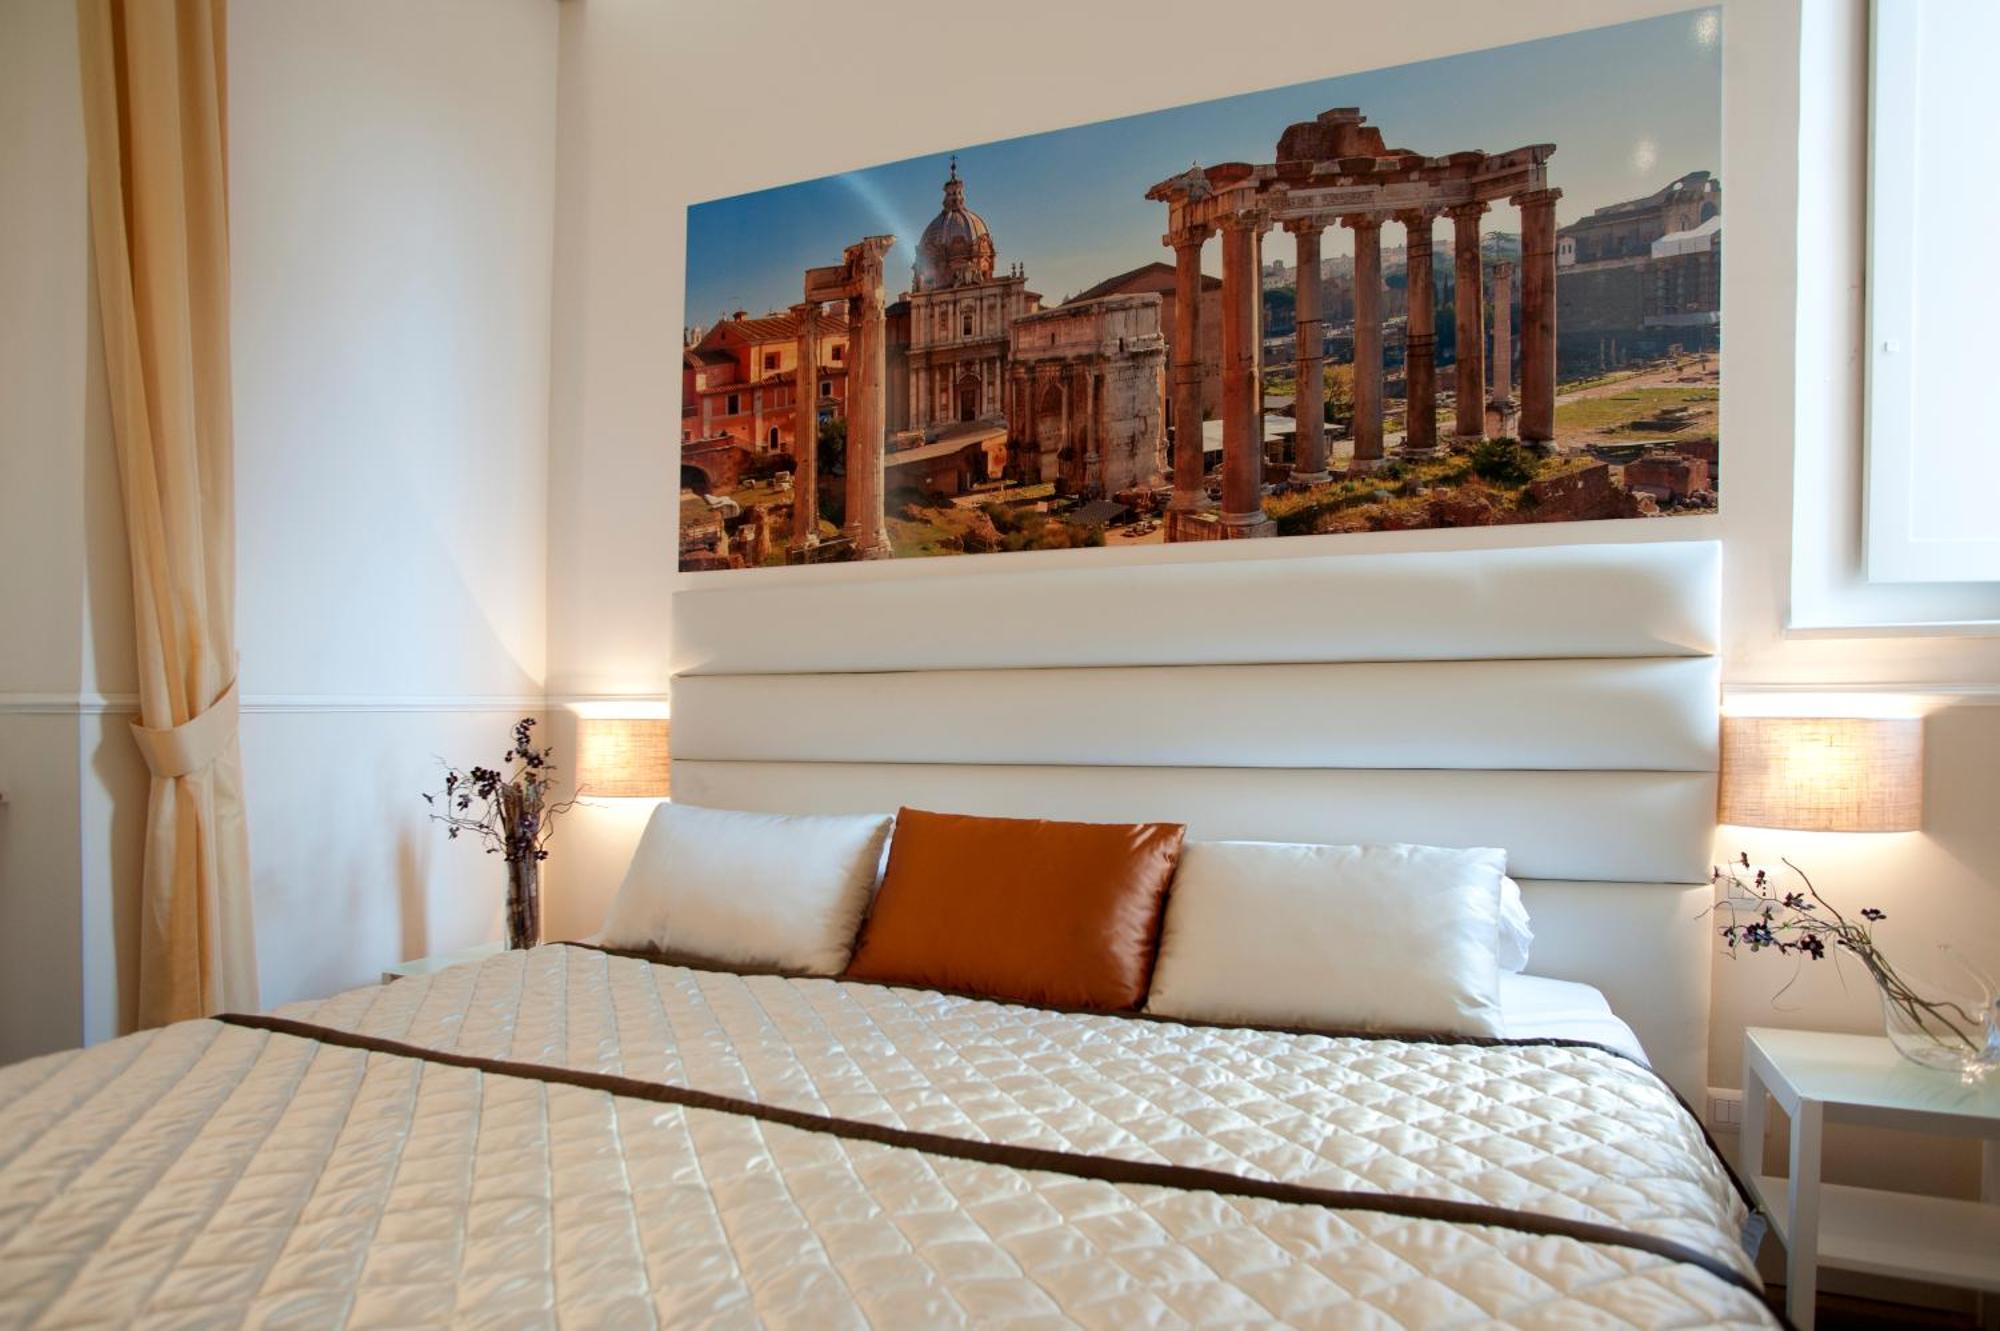 Daplace - La Mongolfiera Rooms In Navona Rome Buitenkant foto